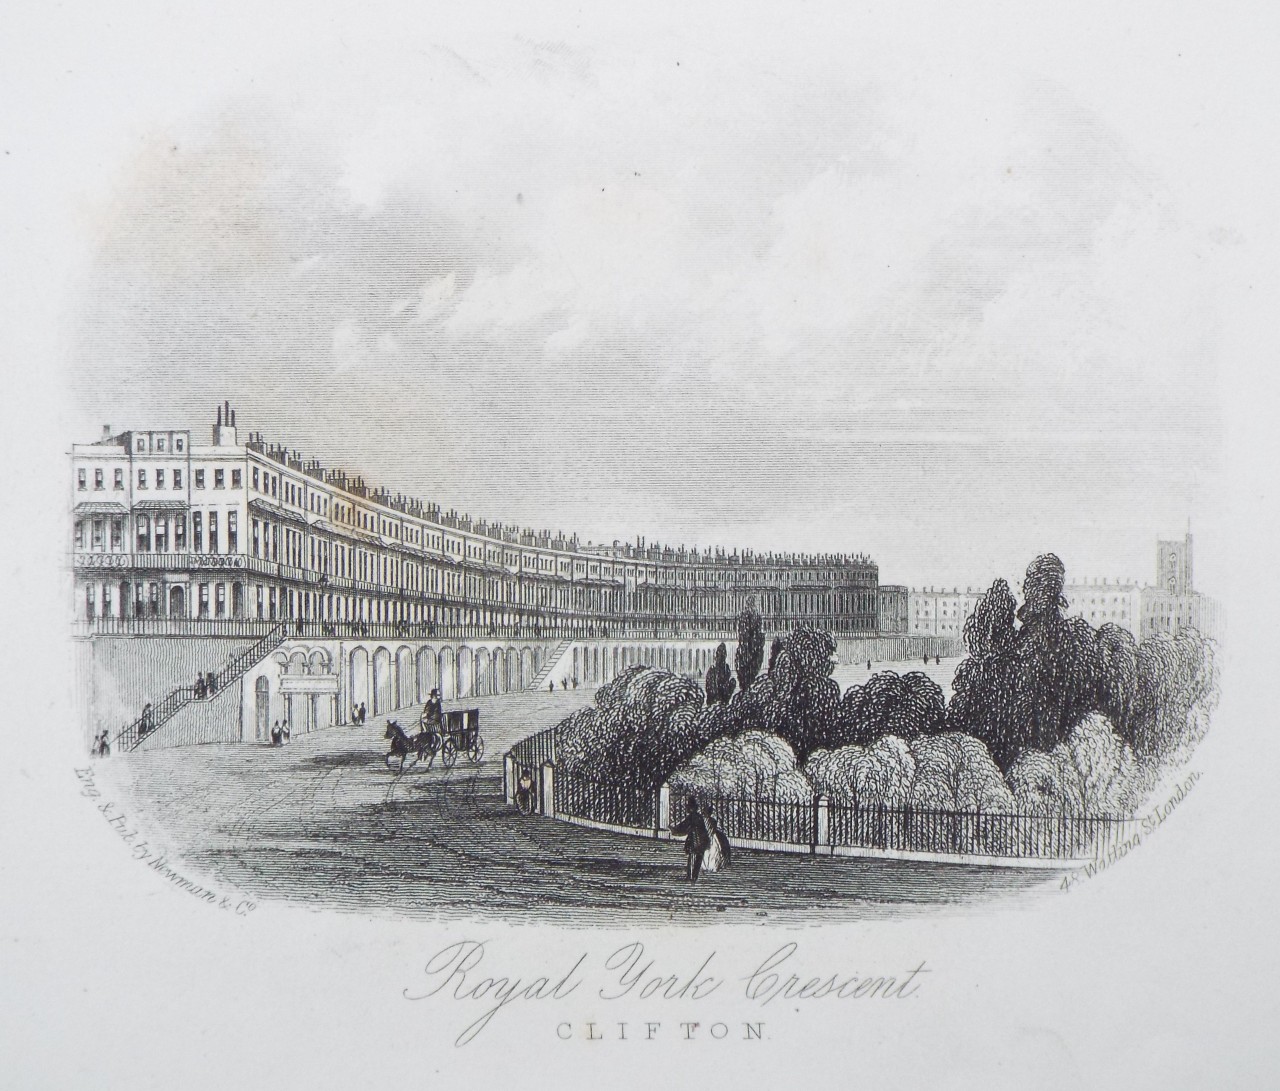 Steel Vignette - Royal York Crescent, Clifton. - Newman